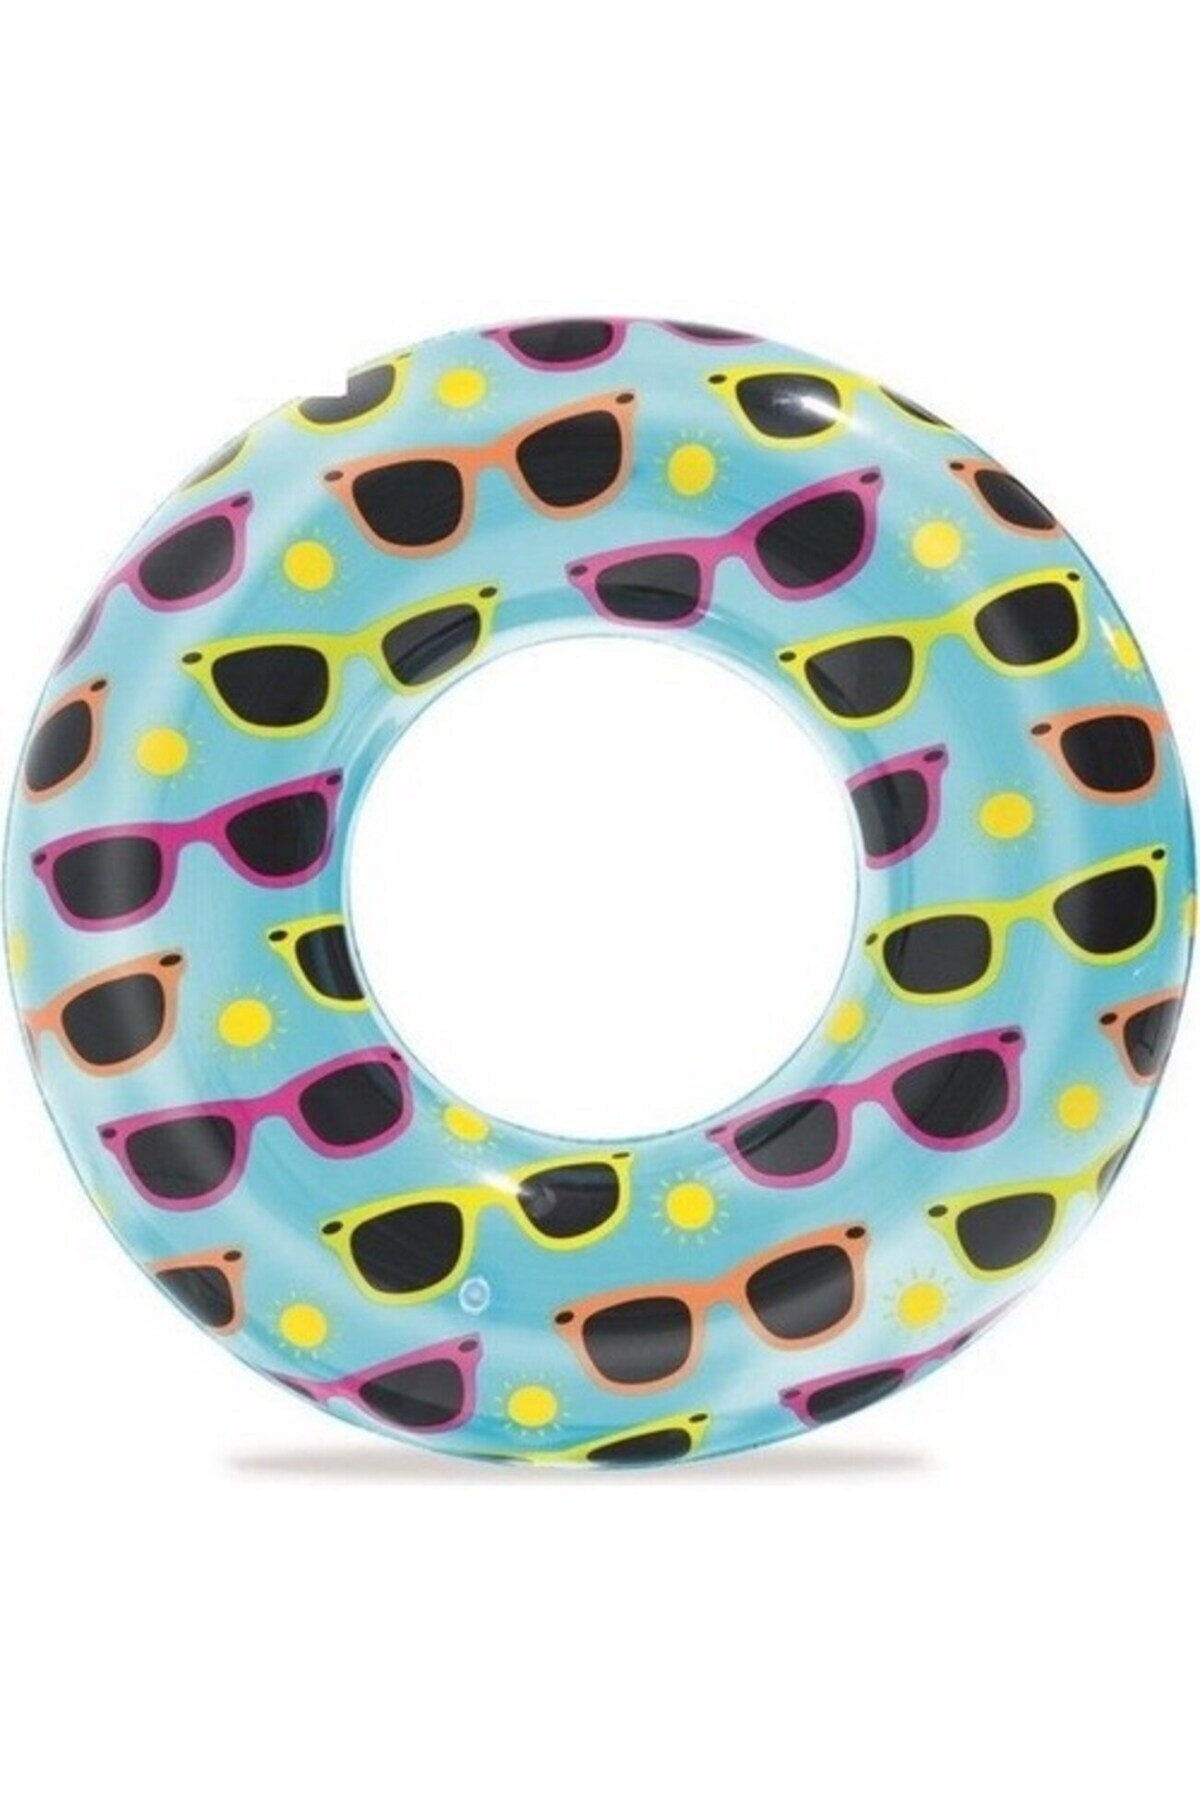 sunglasses patterned bagel 76cm